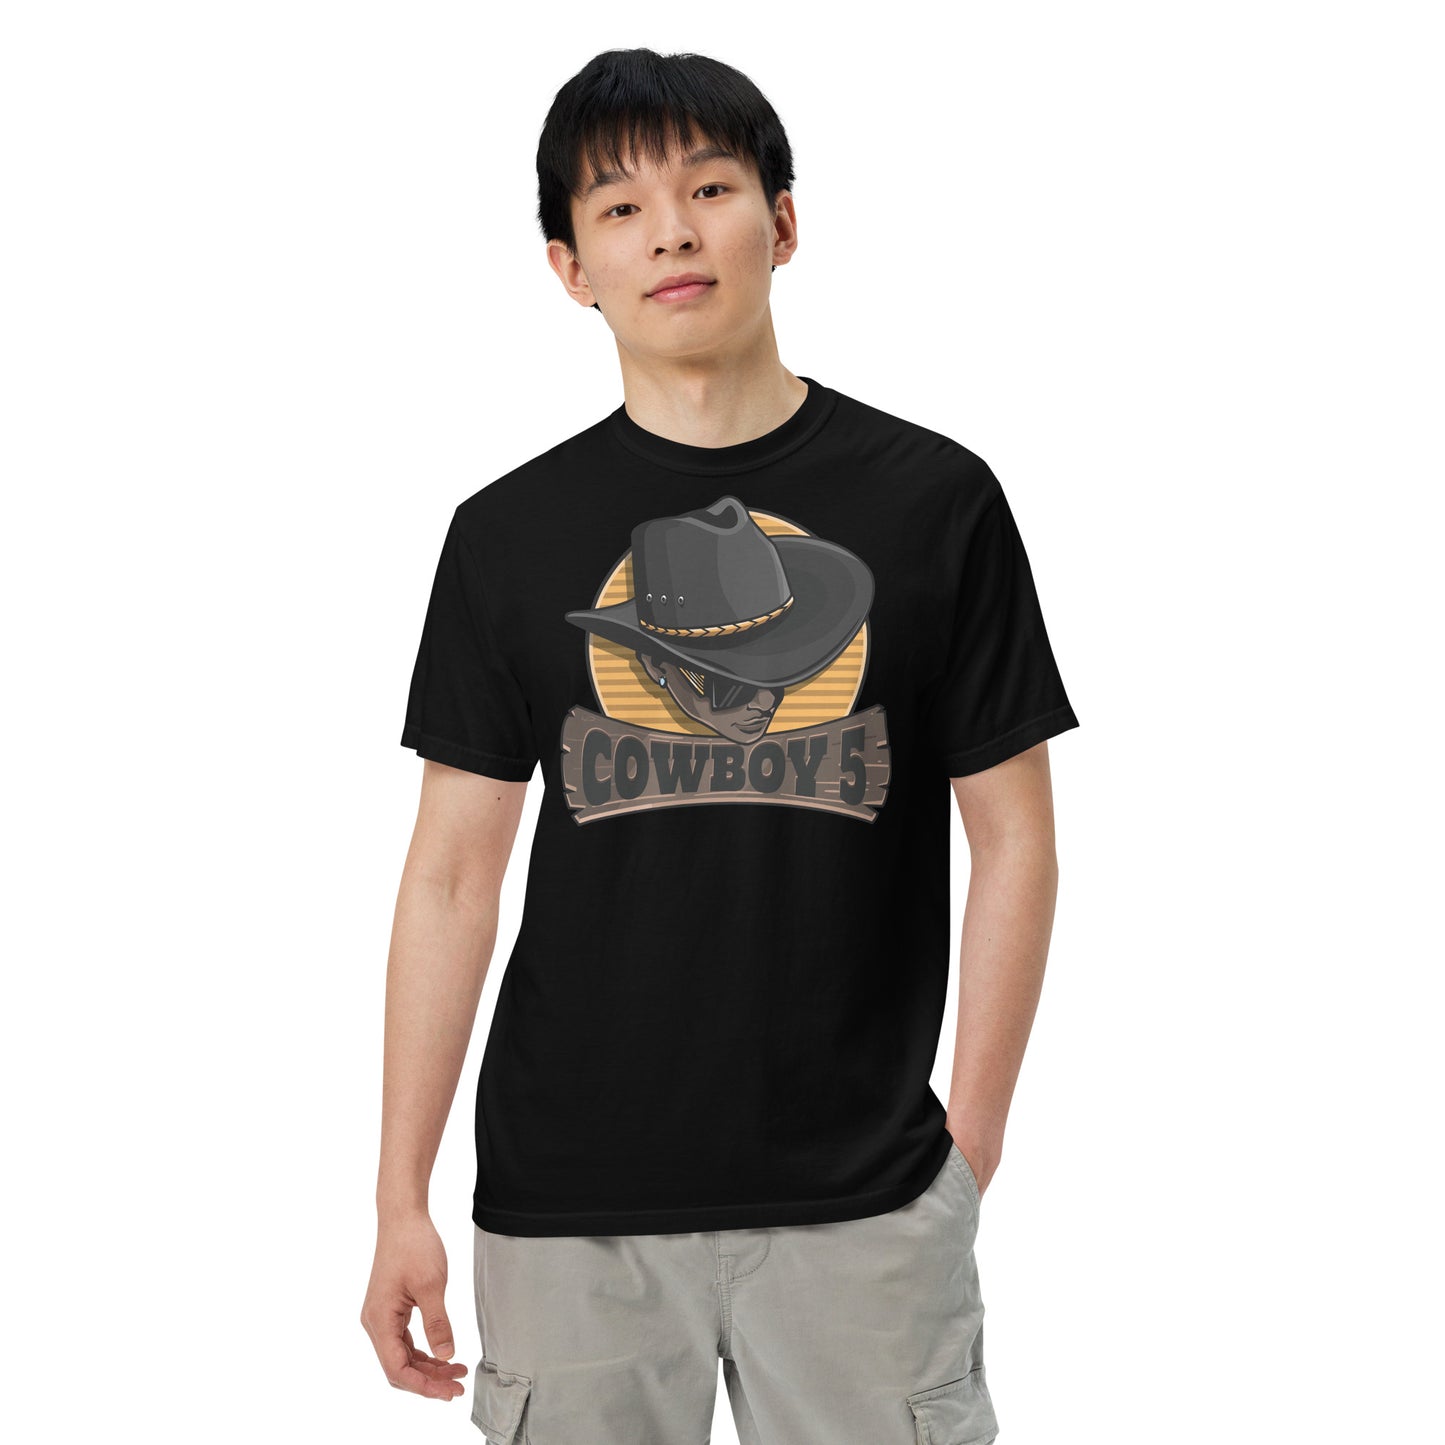 Cowboy5 t-shirt